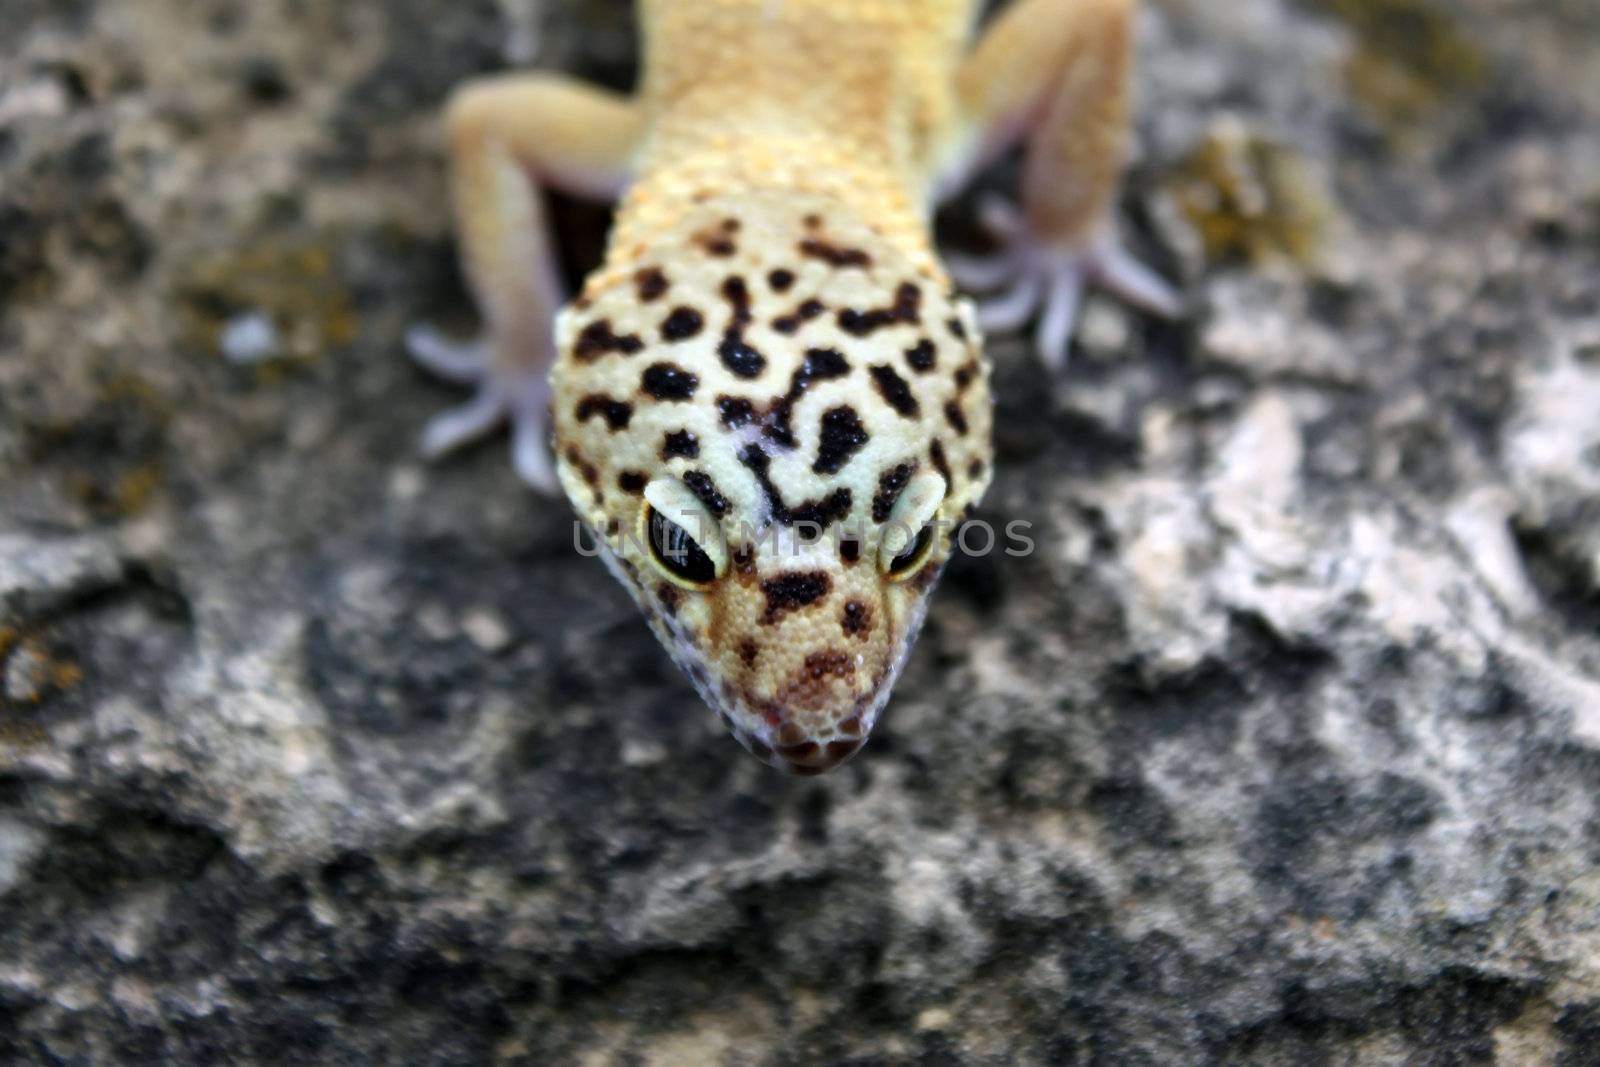 a healthy adult female tangerine leopard gecko